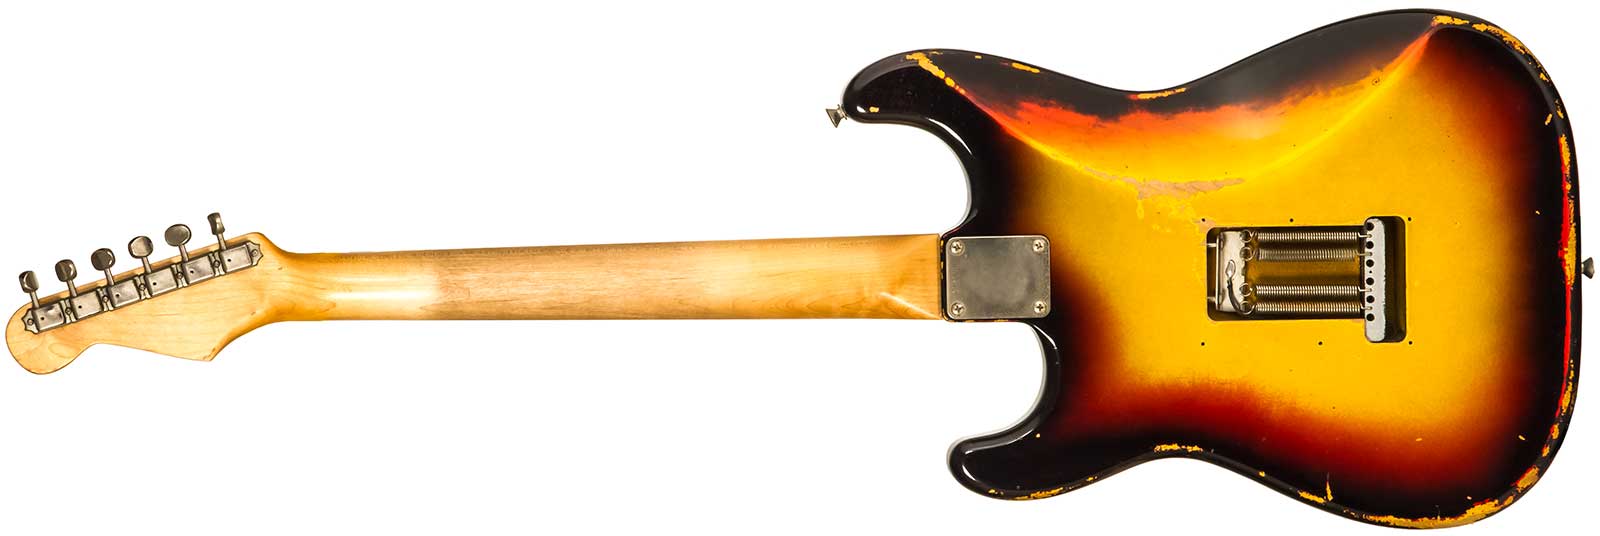 Rebelrelic S-series 1962 3s Trem Rw #231009 - 3-tone Sunburst - Str shape electric guitar - Variation 1